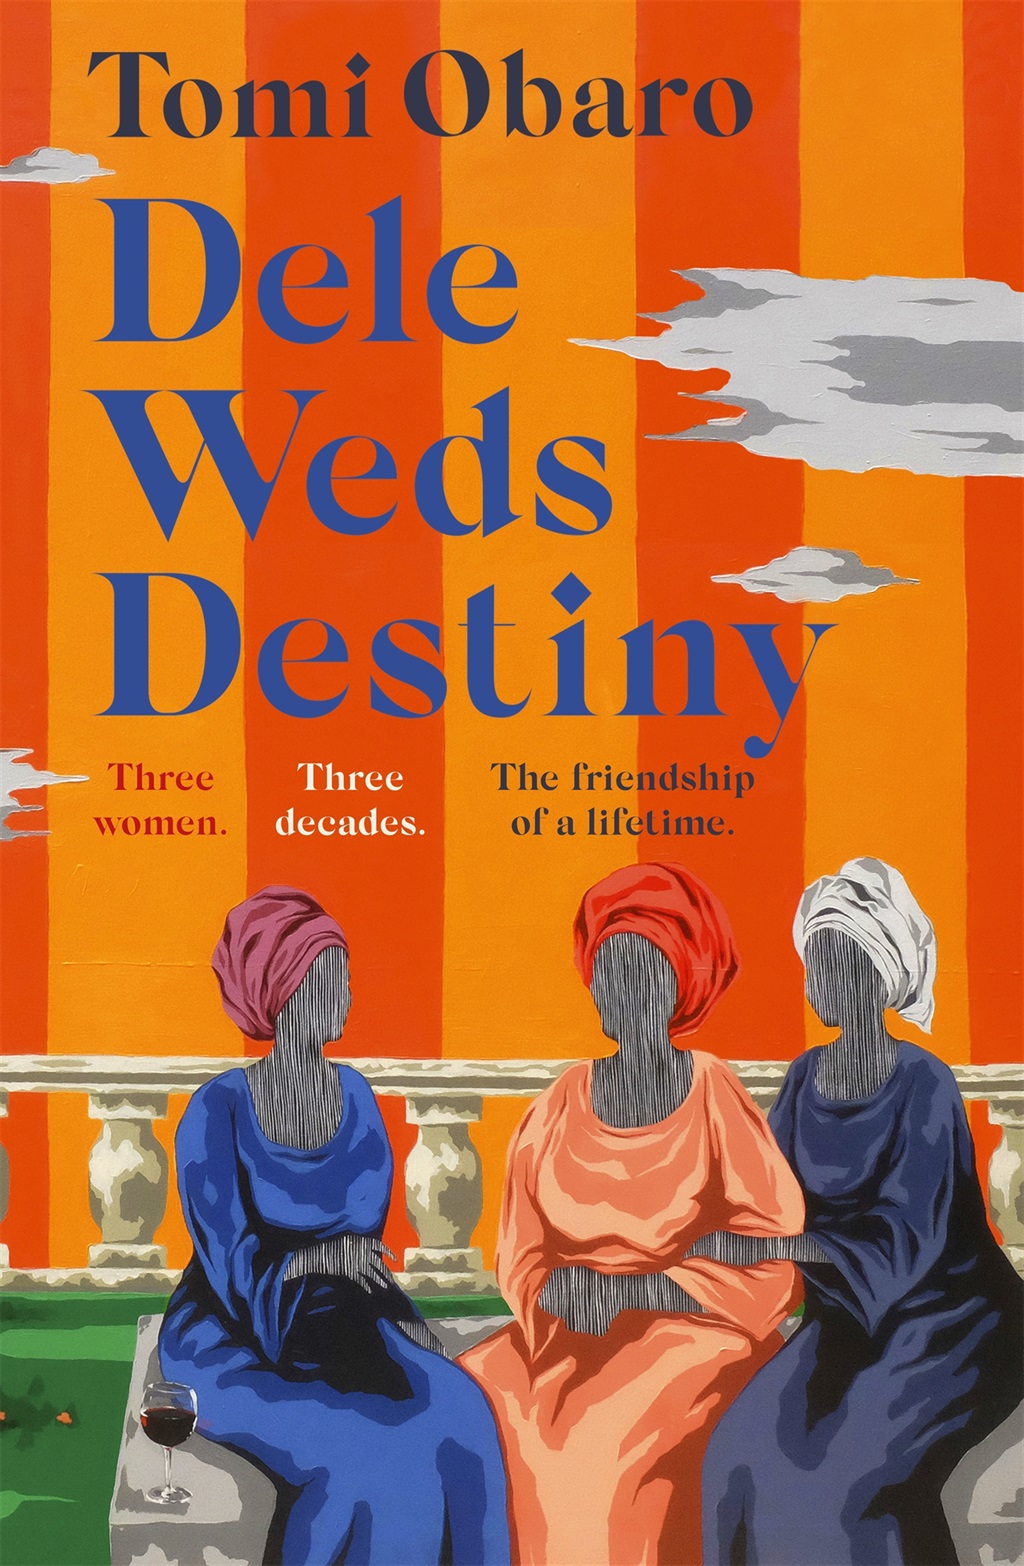 Dele Weds Destiny by Tomi Obaro.(Hodder Studio)